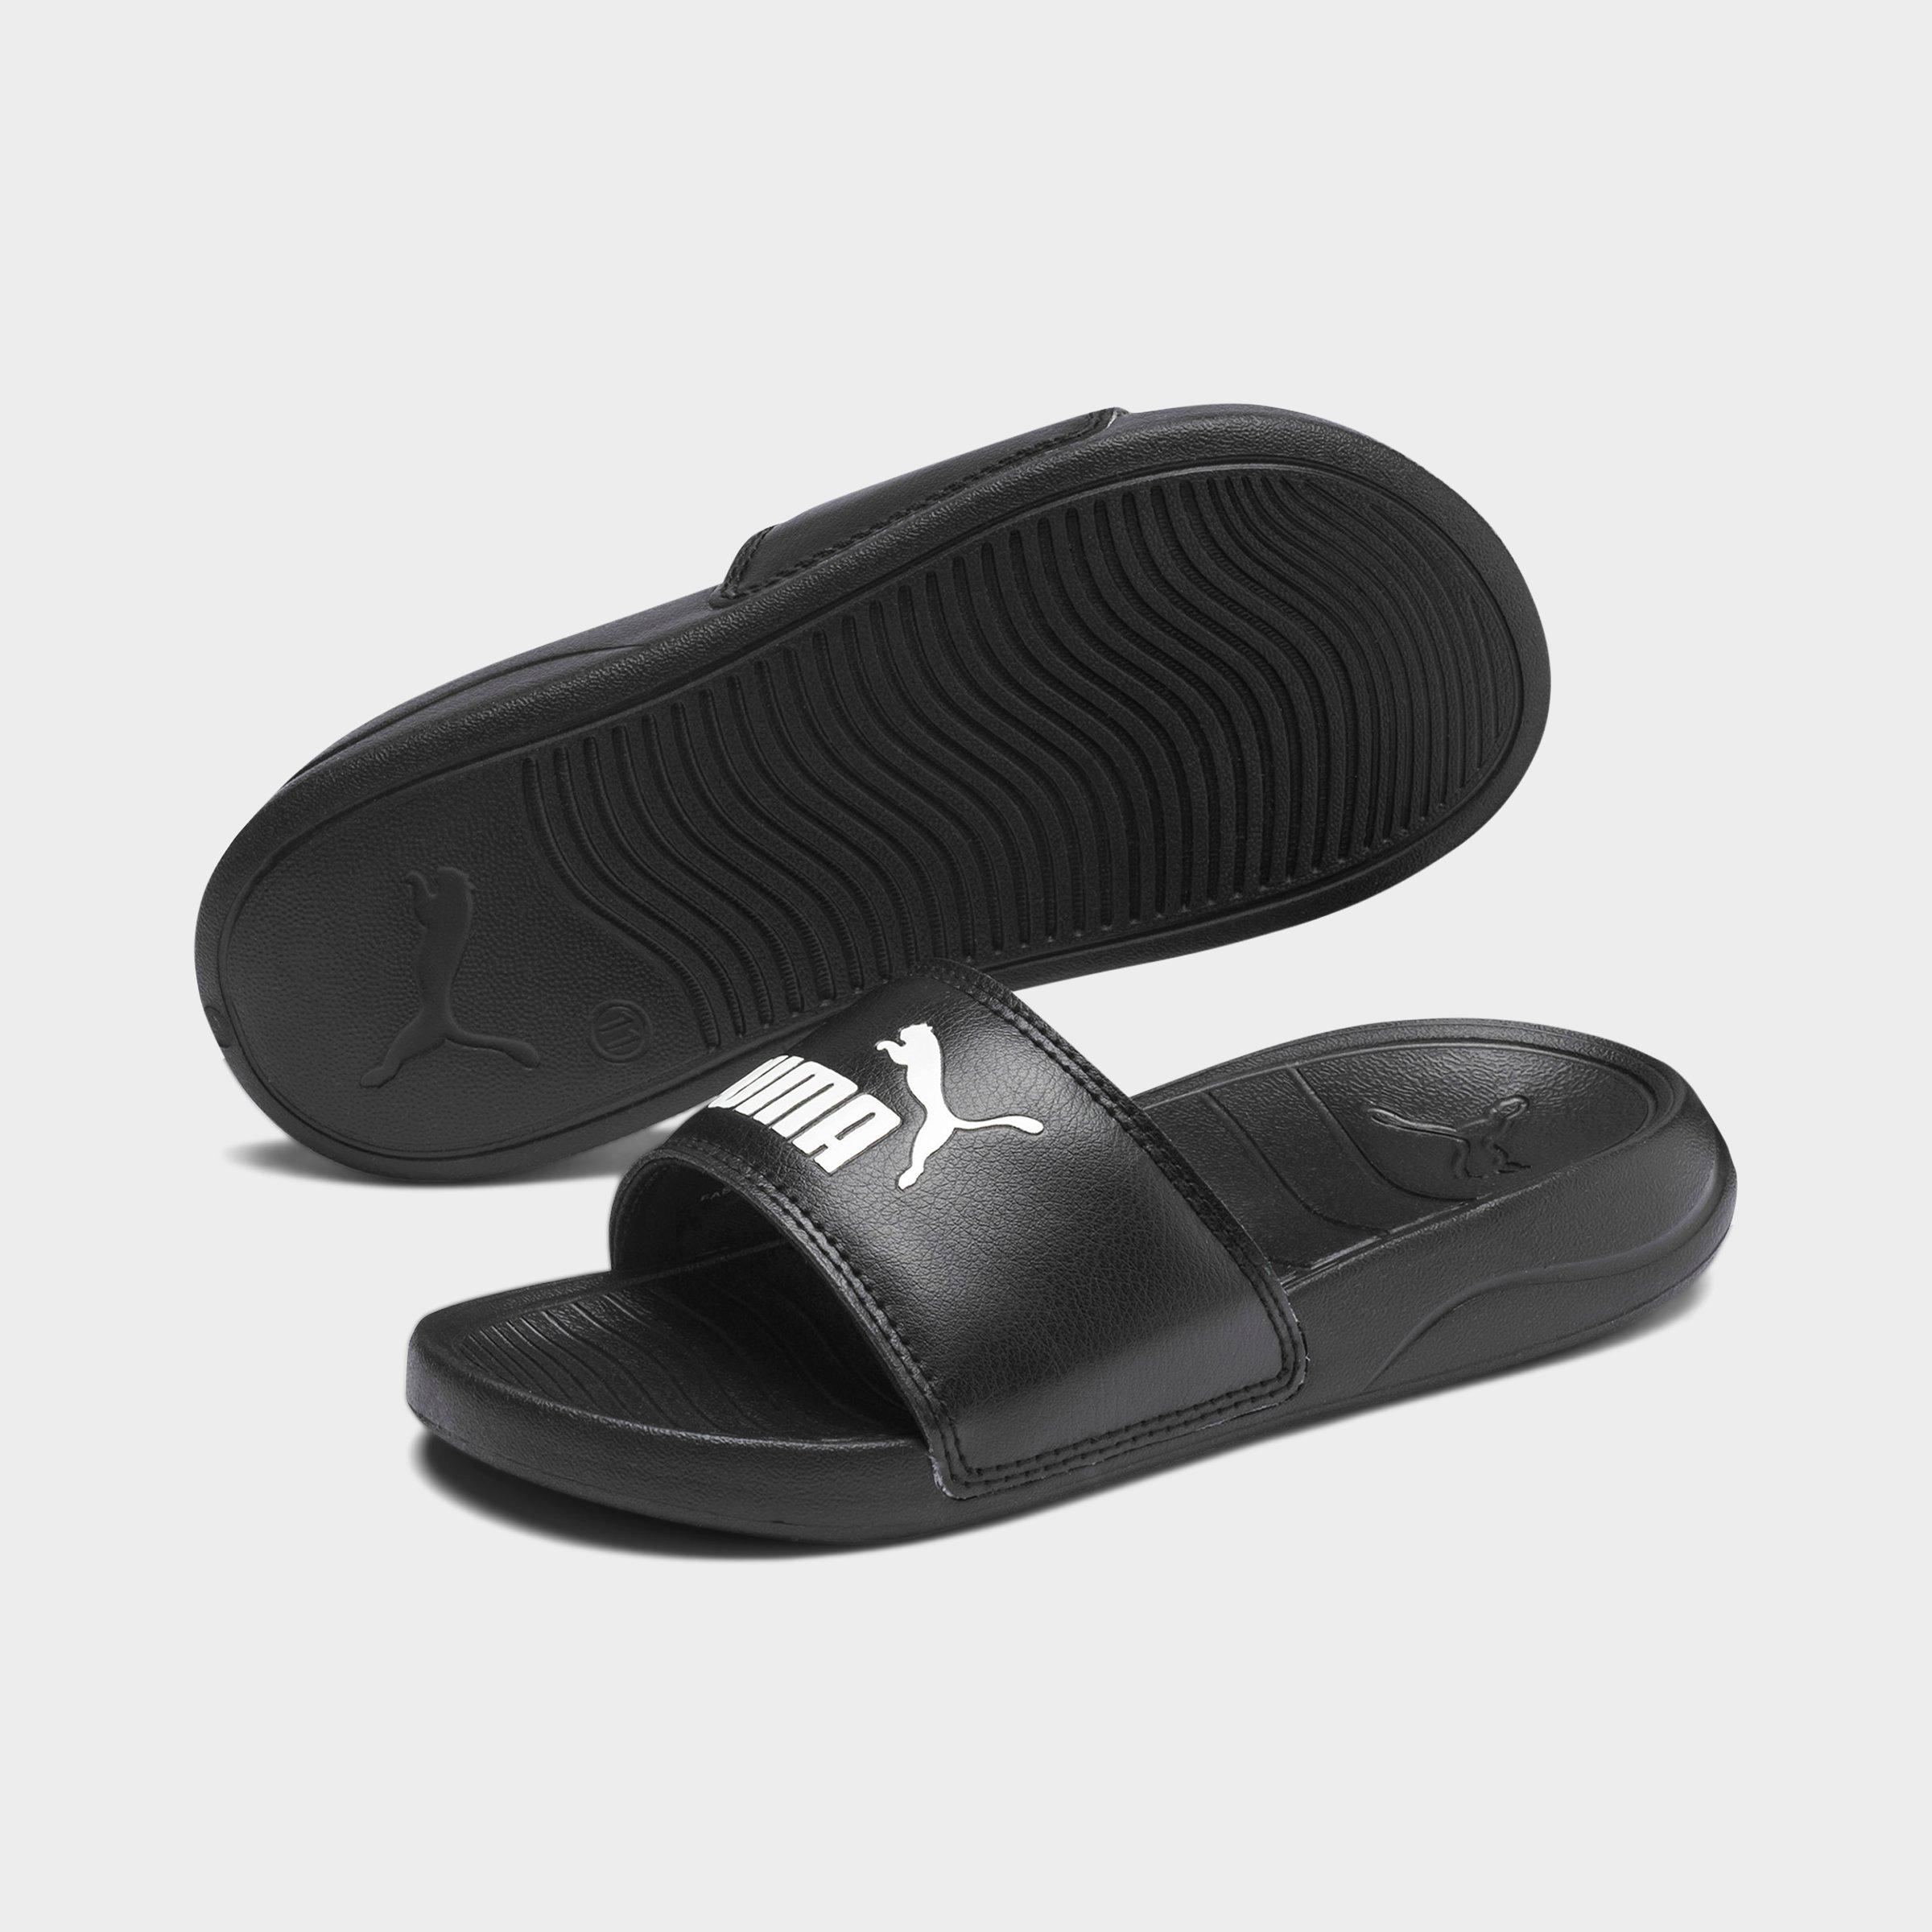 puma sandals for boys